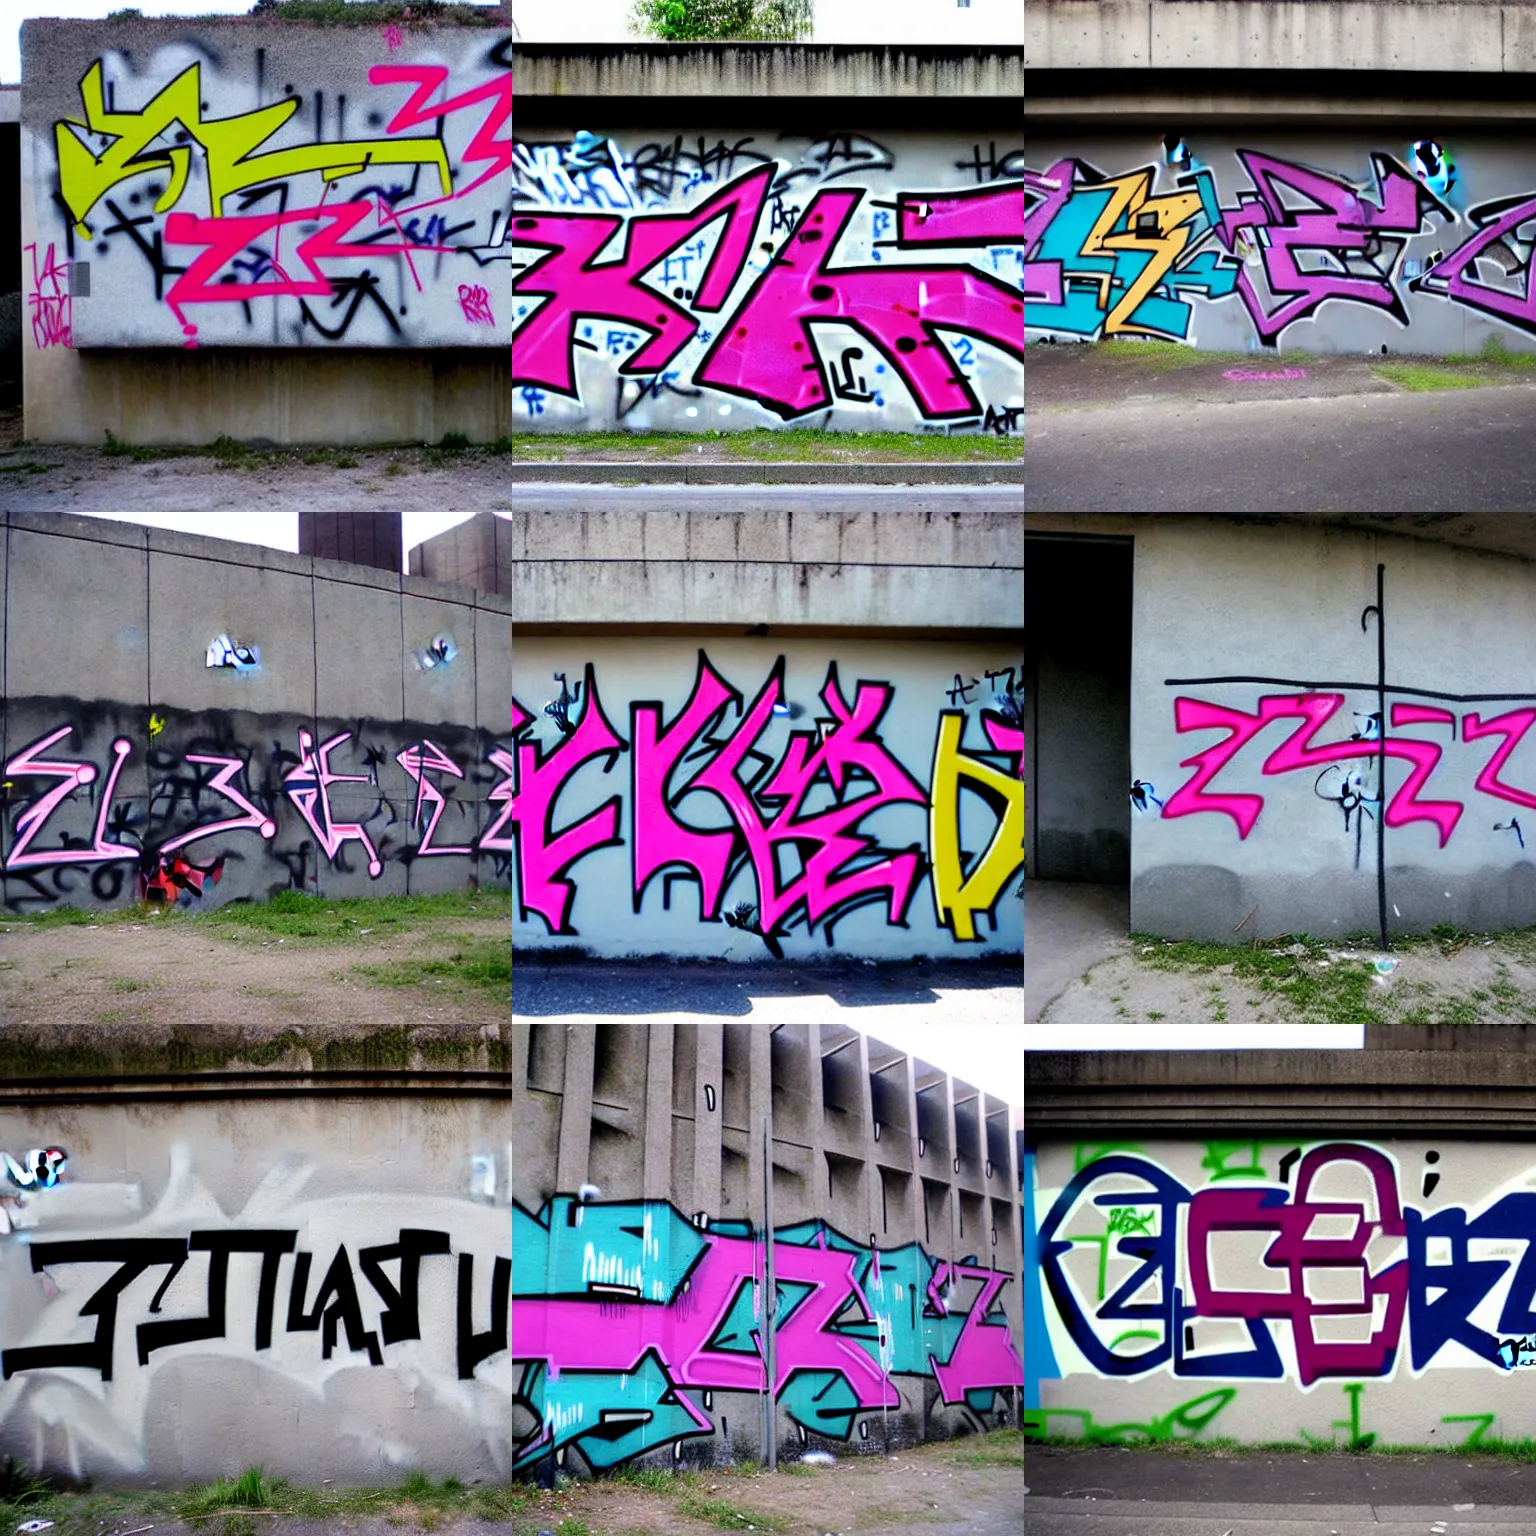 Prompt: brutalist ignorant graffiti that says zatla